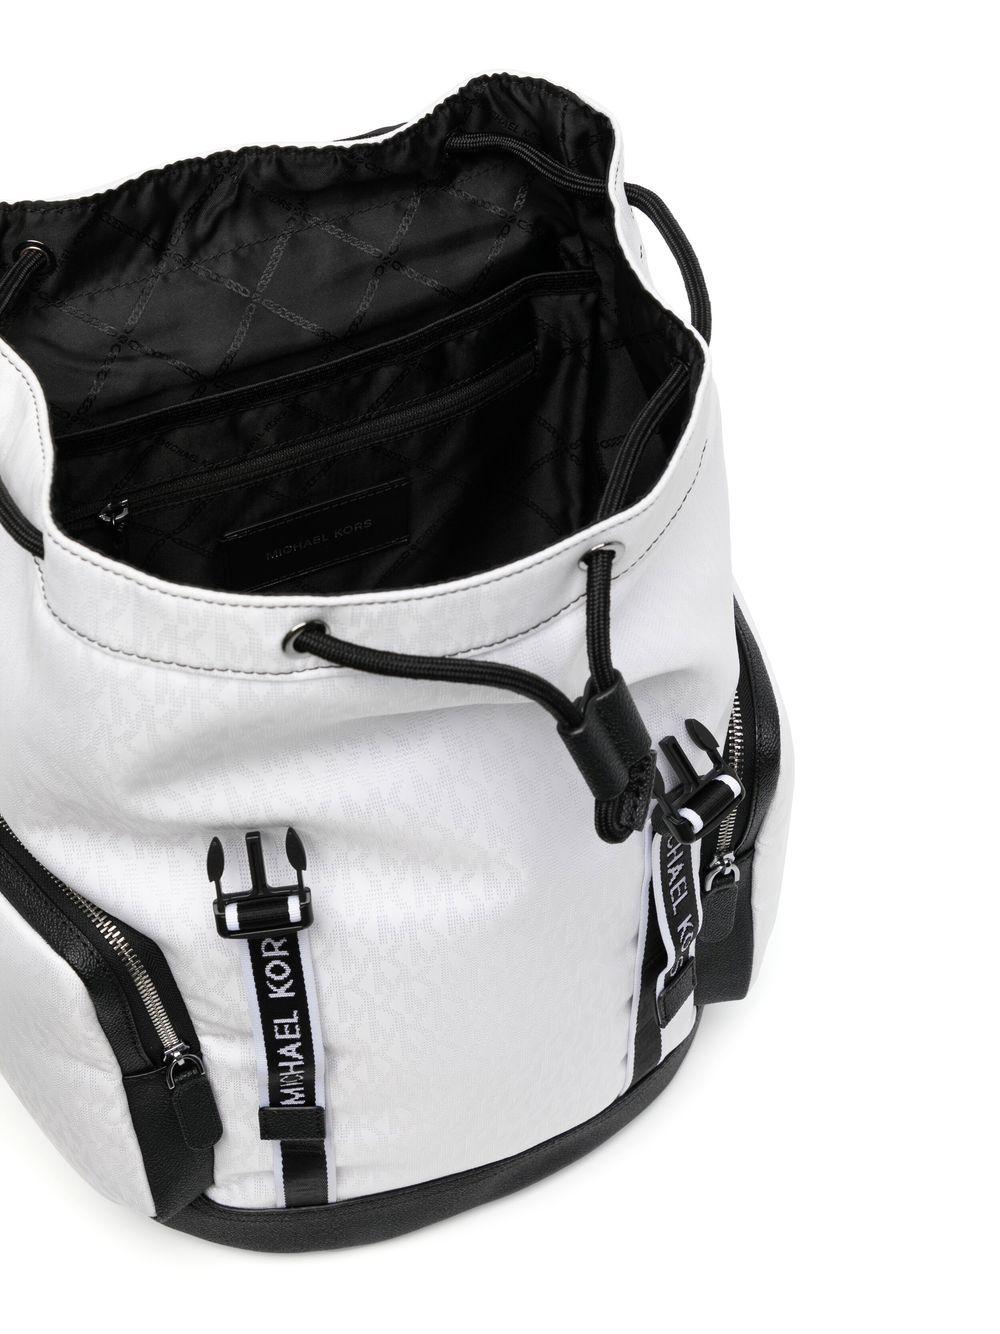 Michael Kors Black/White Nylon and Leather Kent Backpack Michael Kors